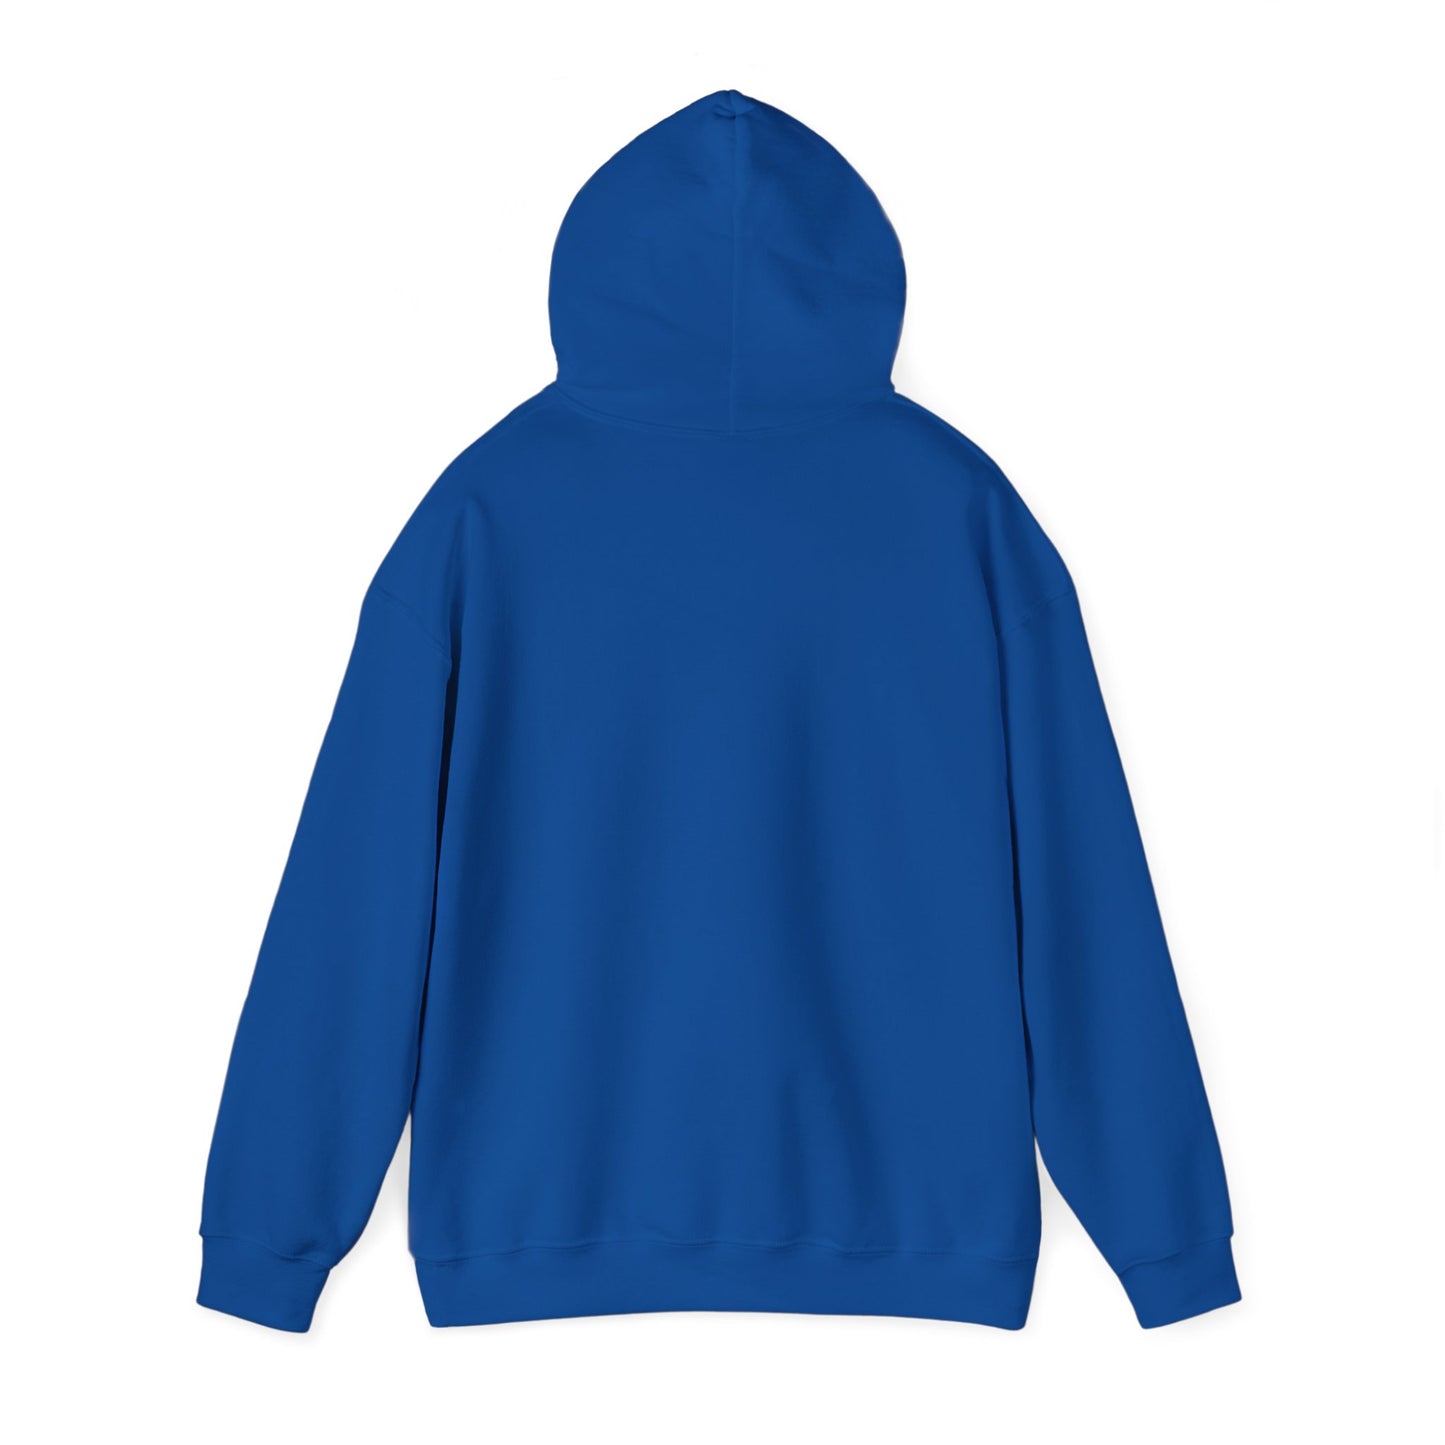 'Why Me?' Unisex Heavy Blend™ Hooded Sweatshirt